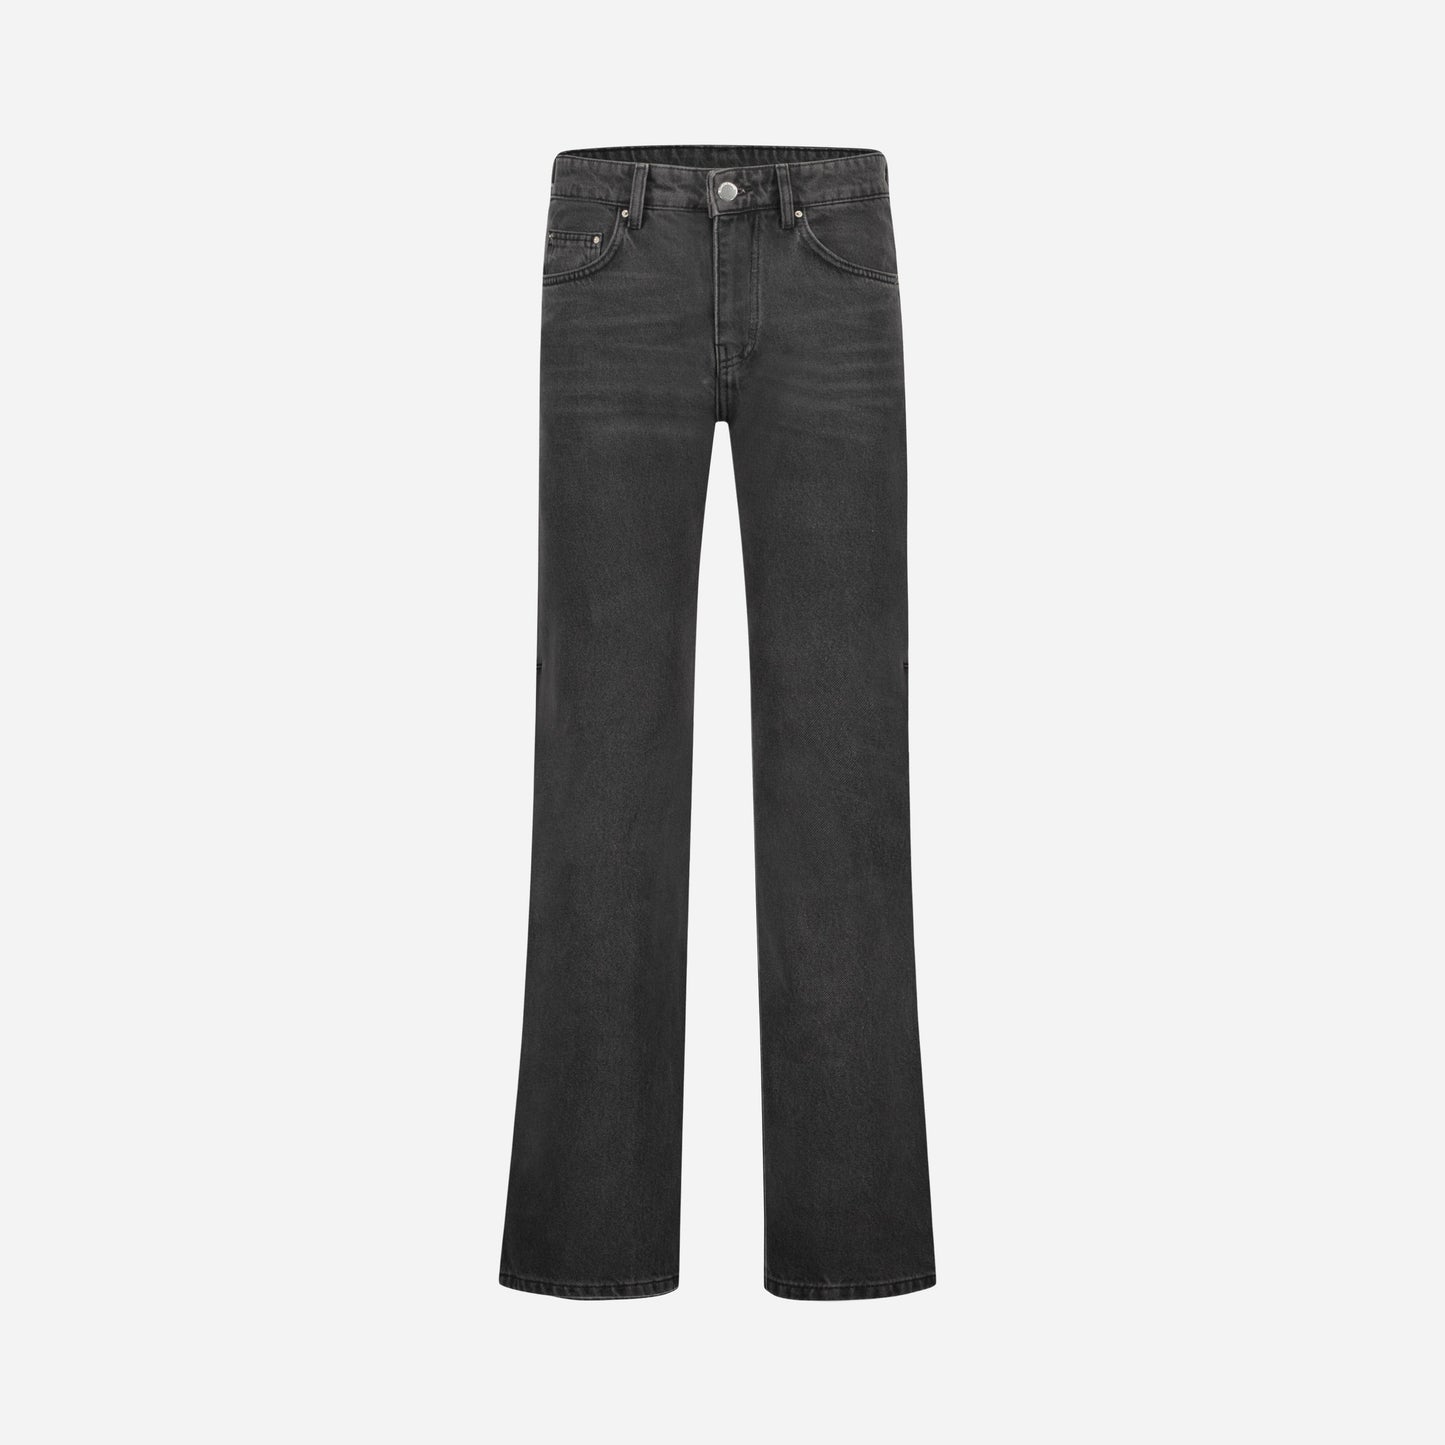 Straight Bootcut Jeans in Ash Grey Denim